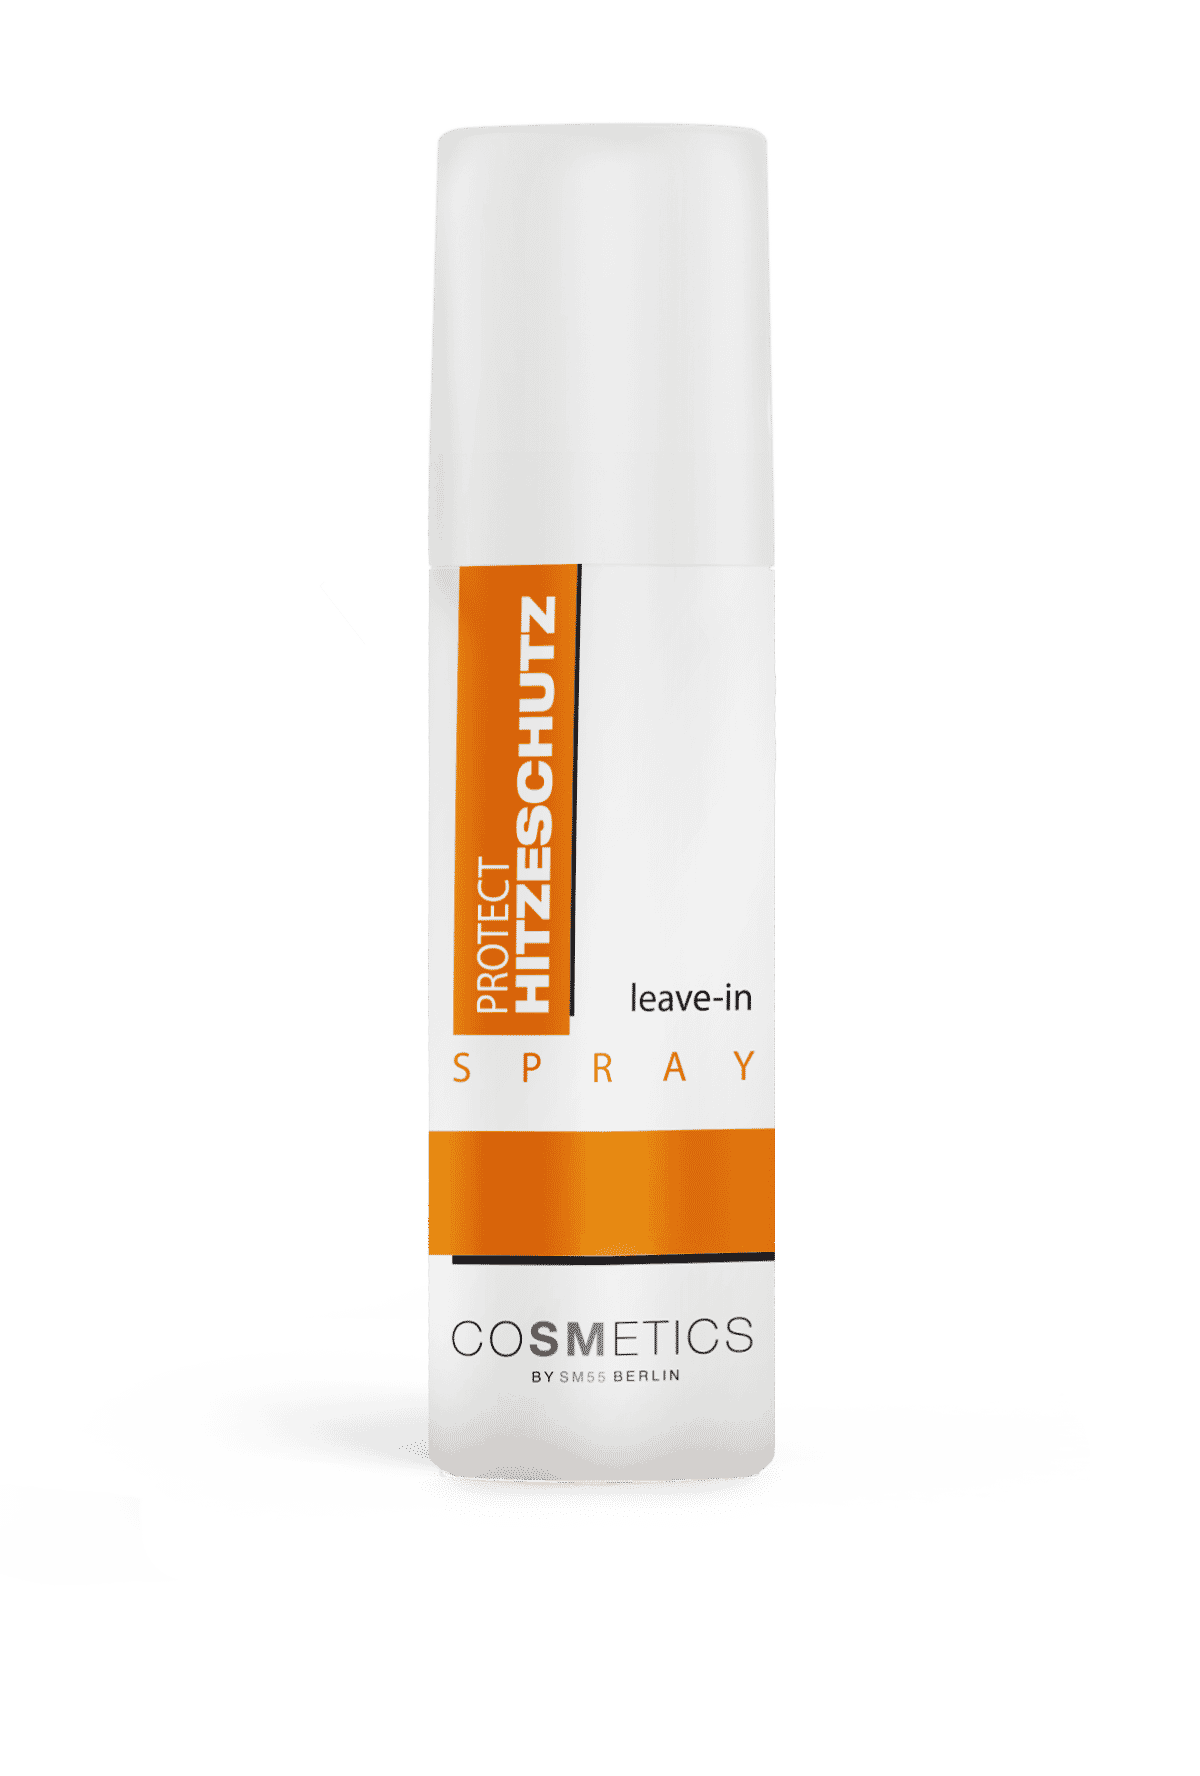 Hitzeschutz Spray - Cosmetics by SM55 Berlin